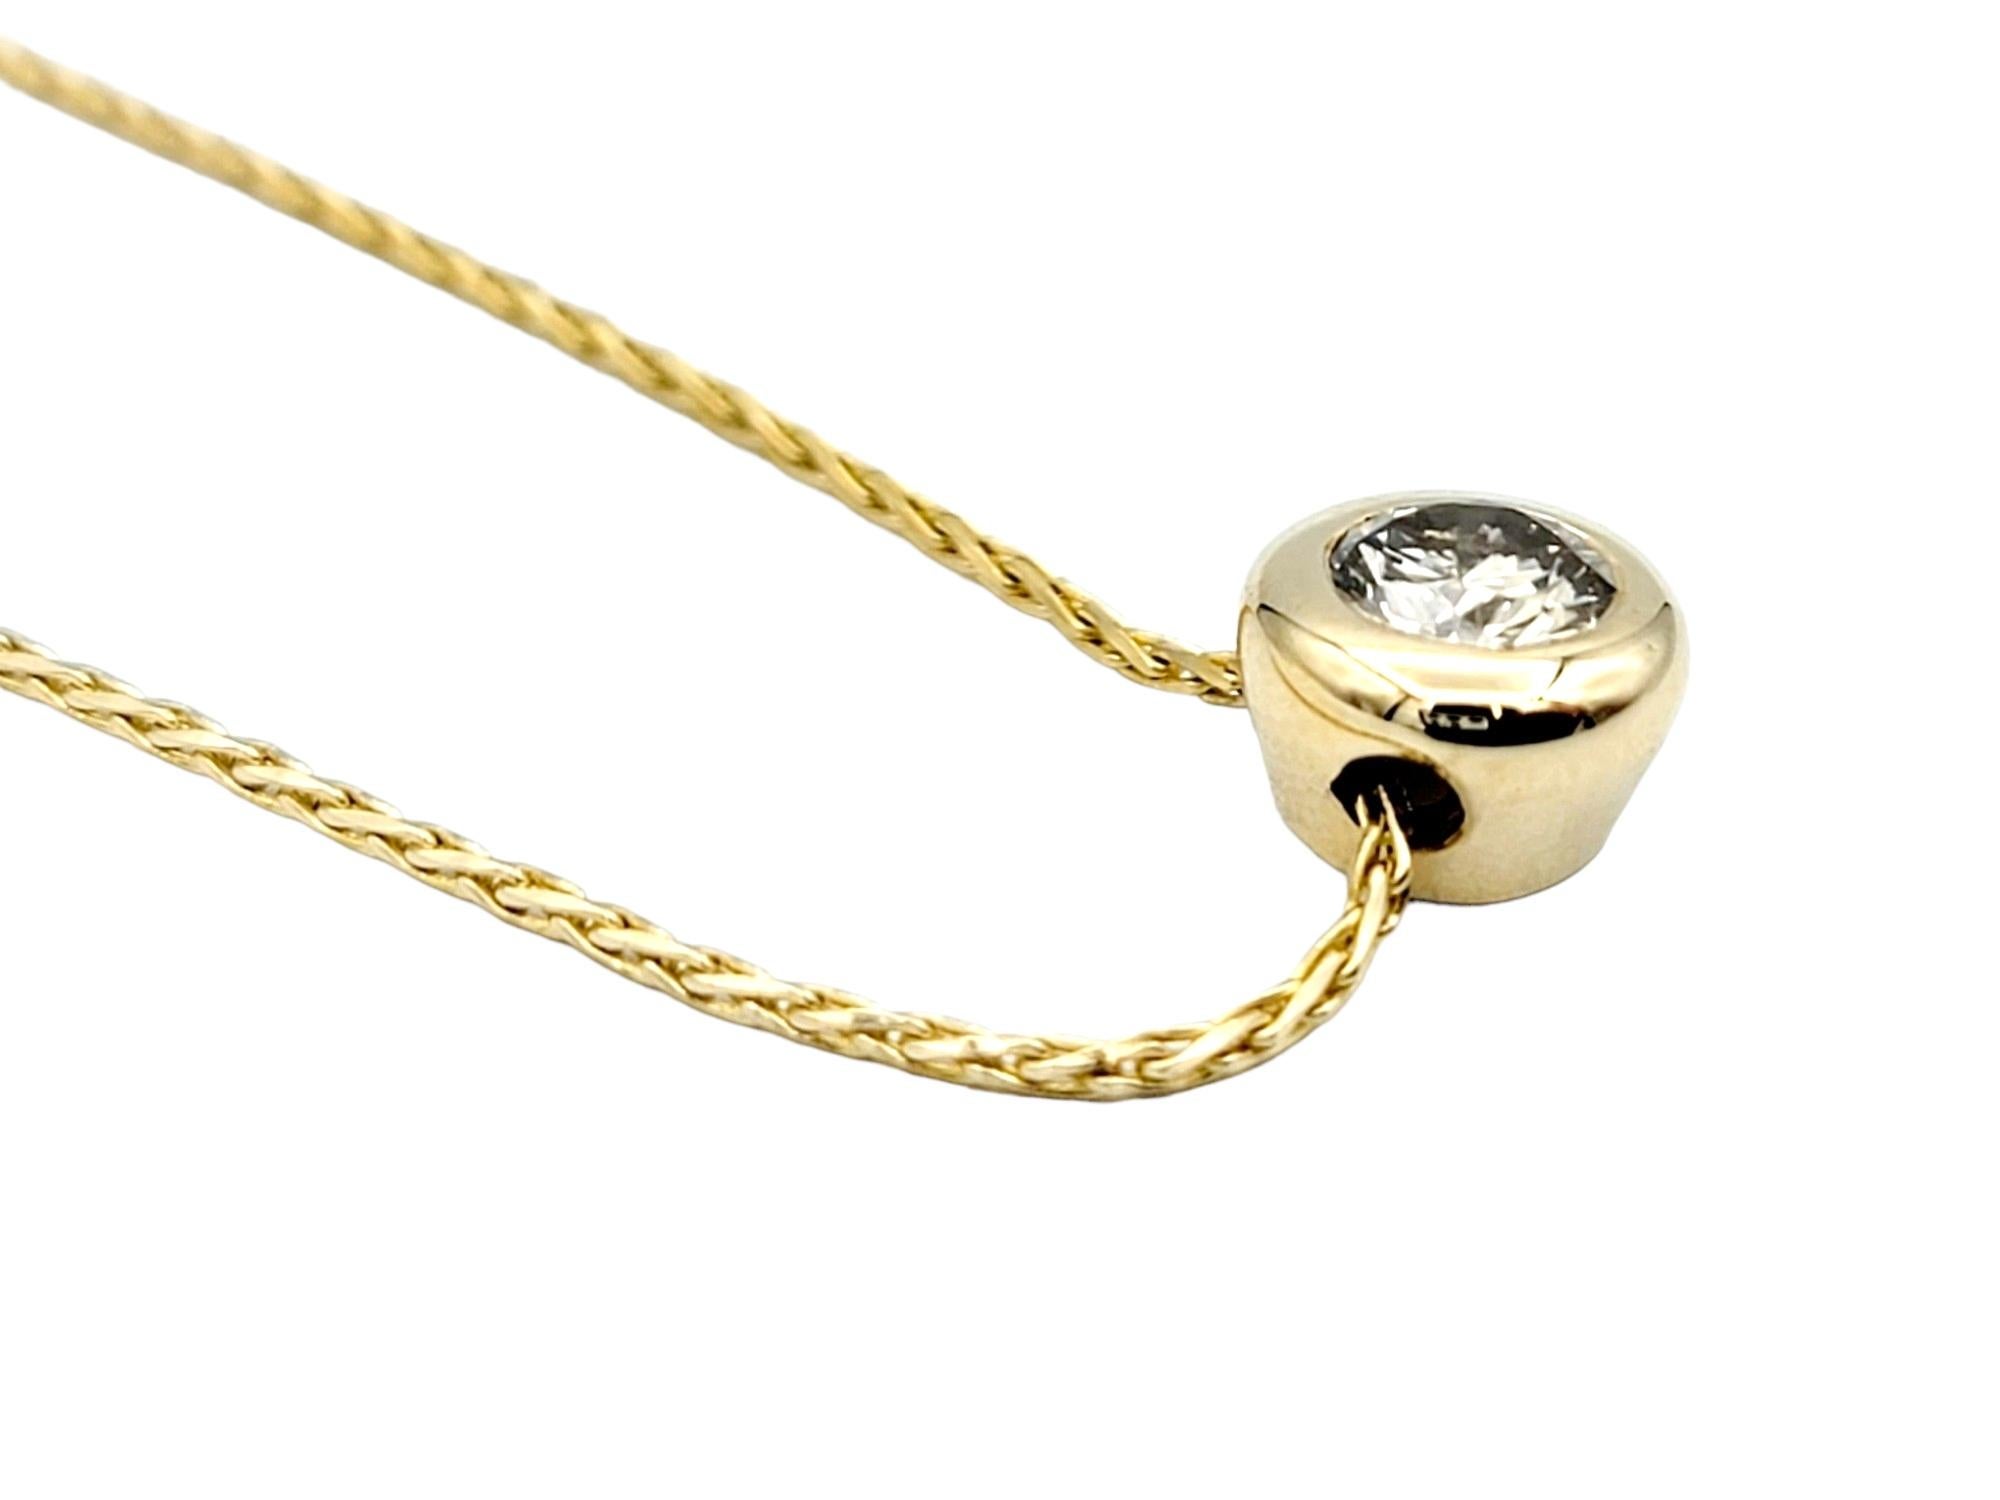 Contemporary Round Diamond Bezel Solitaire Pendant Necklace in 14 Karat Yellow Gold 16.25